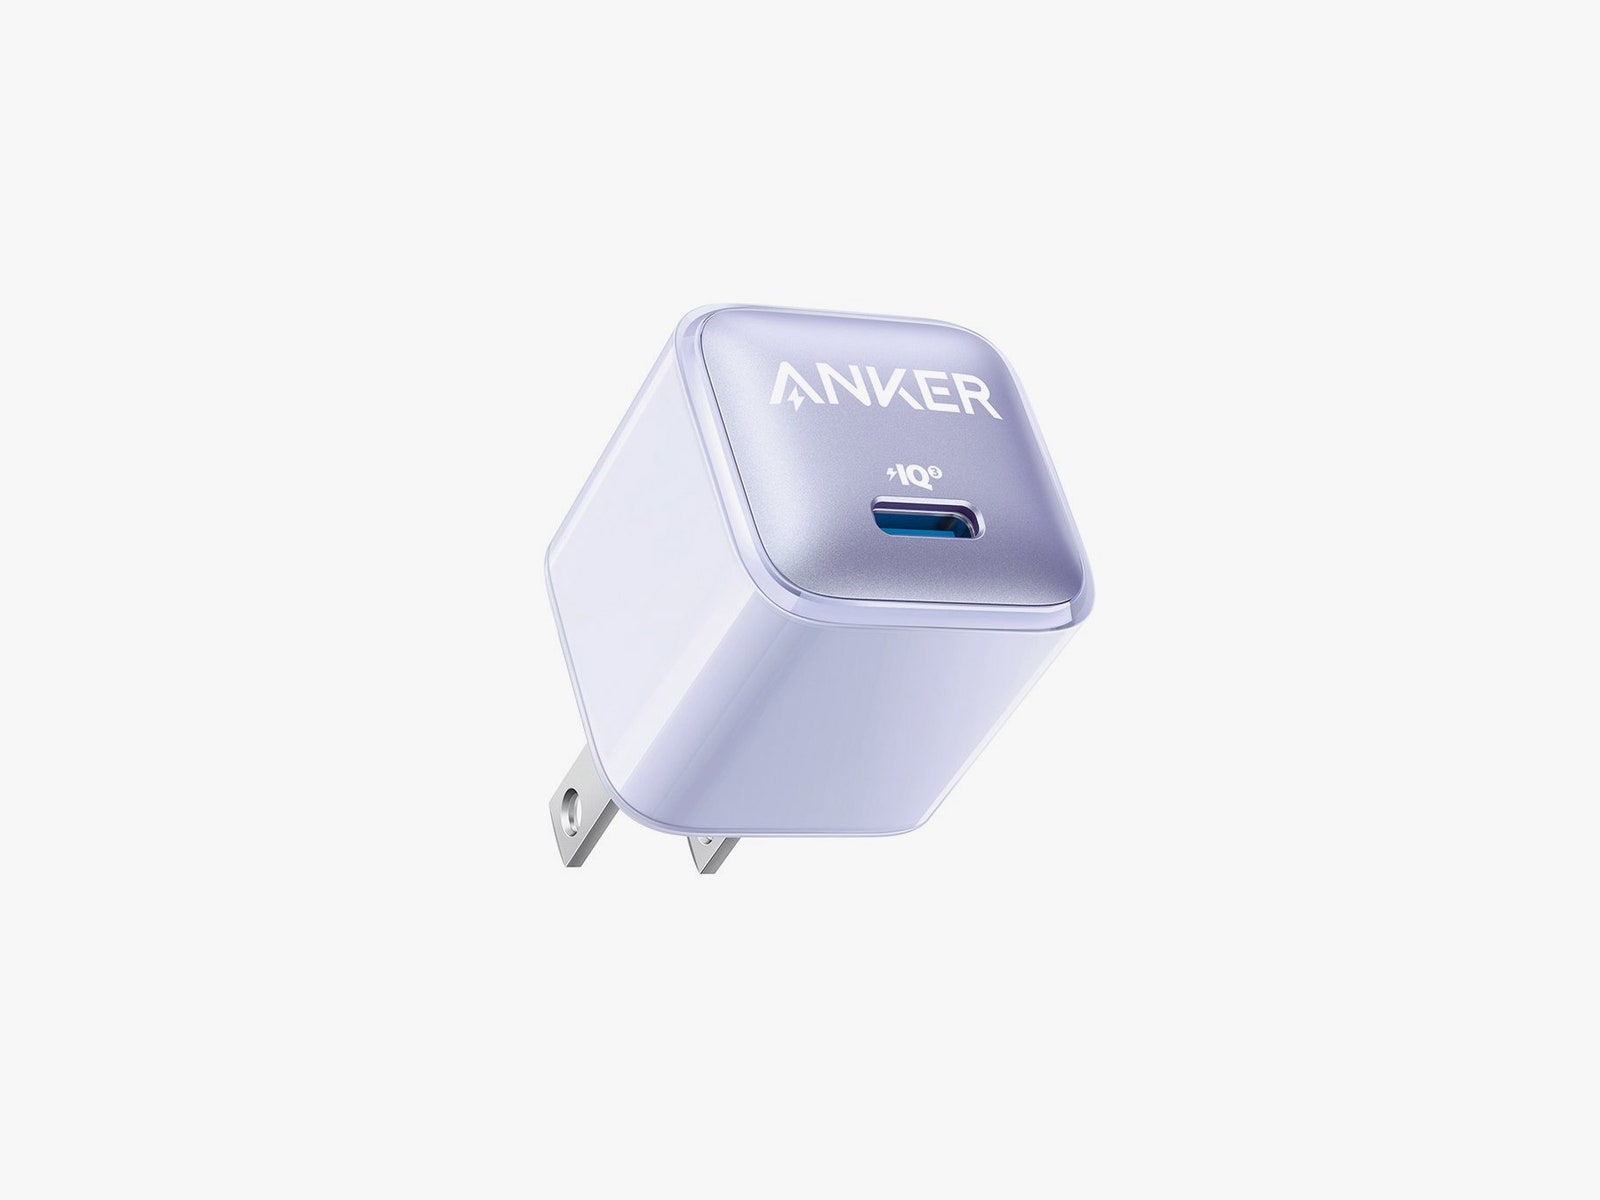 Anker power adapter